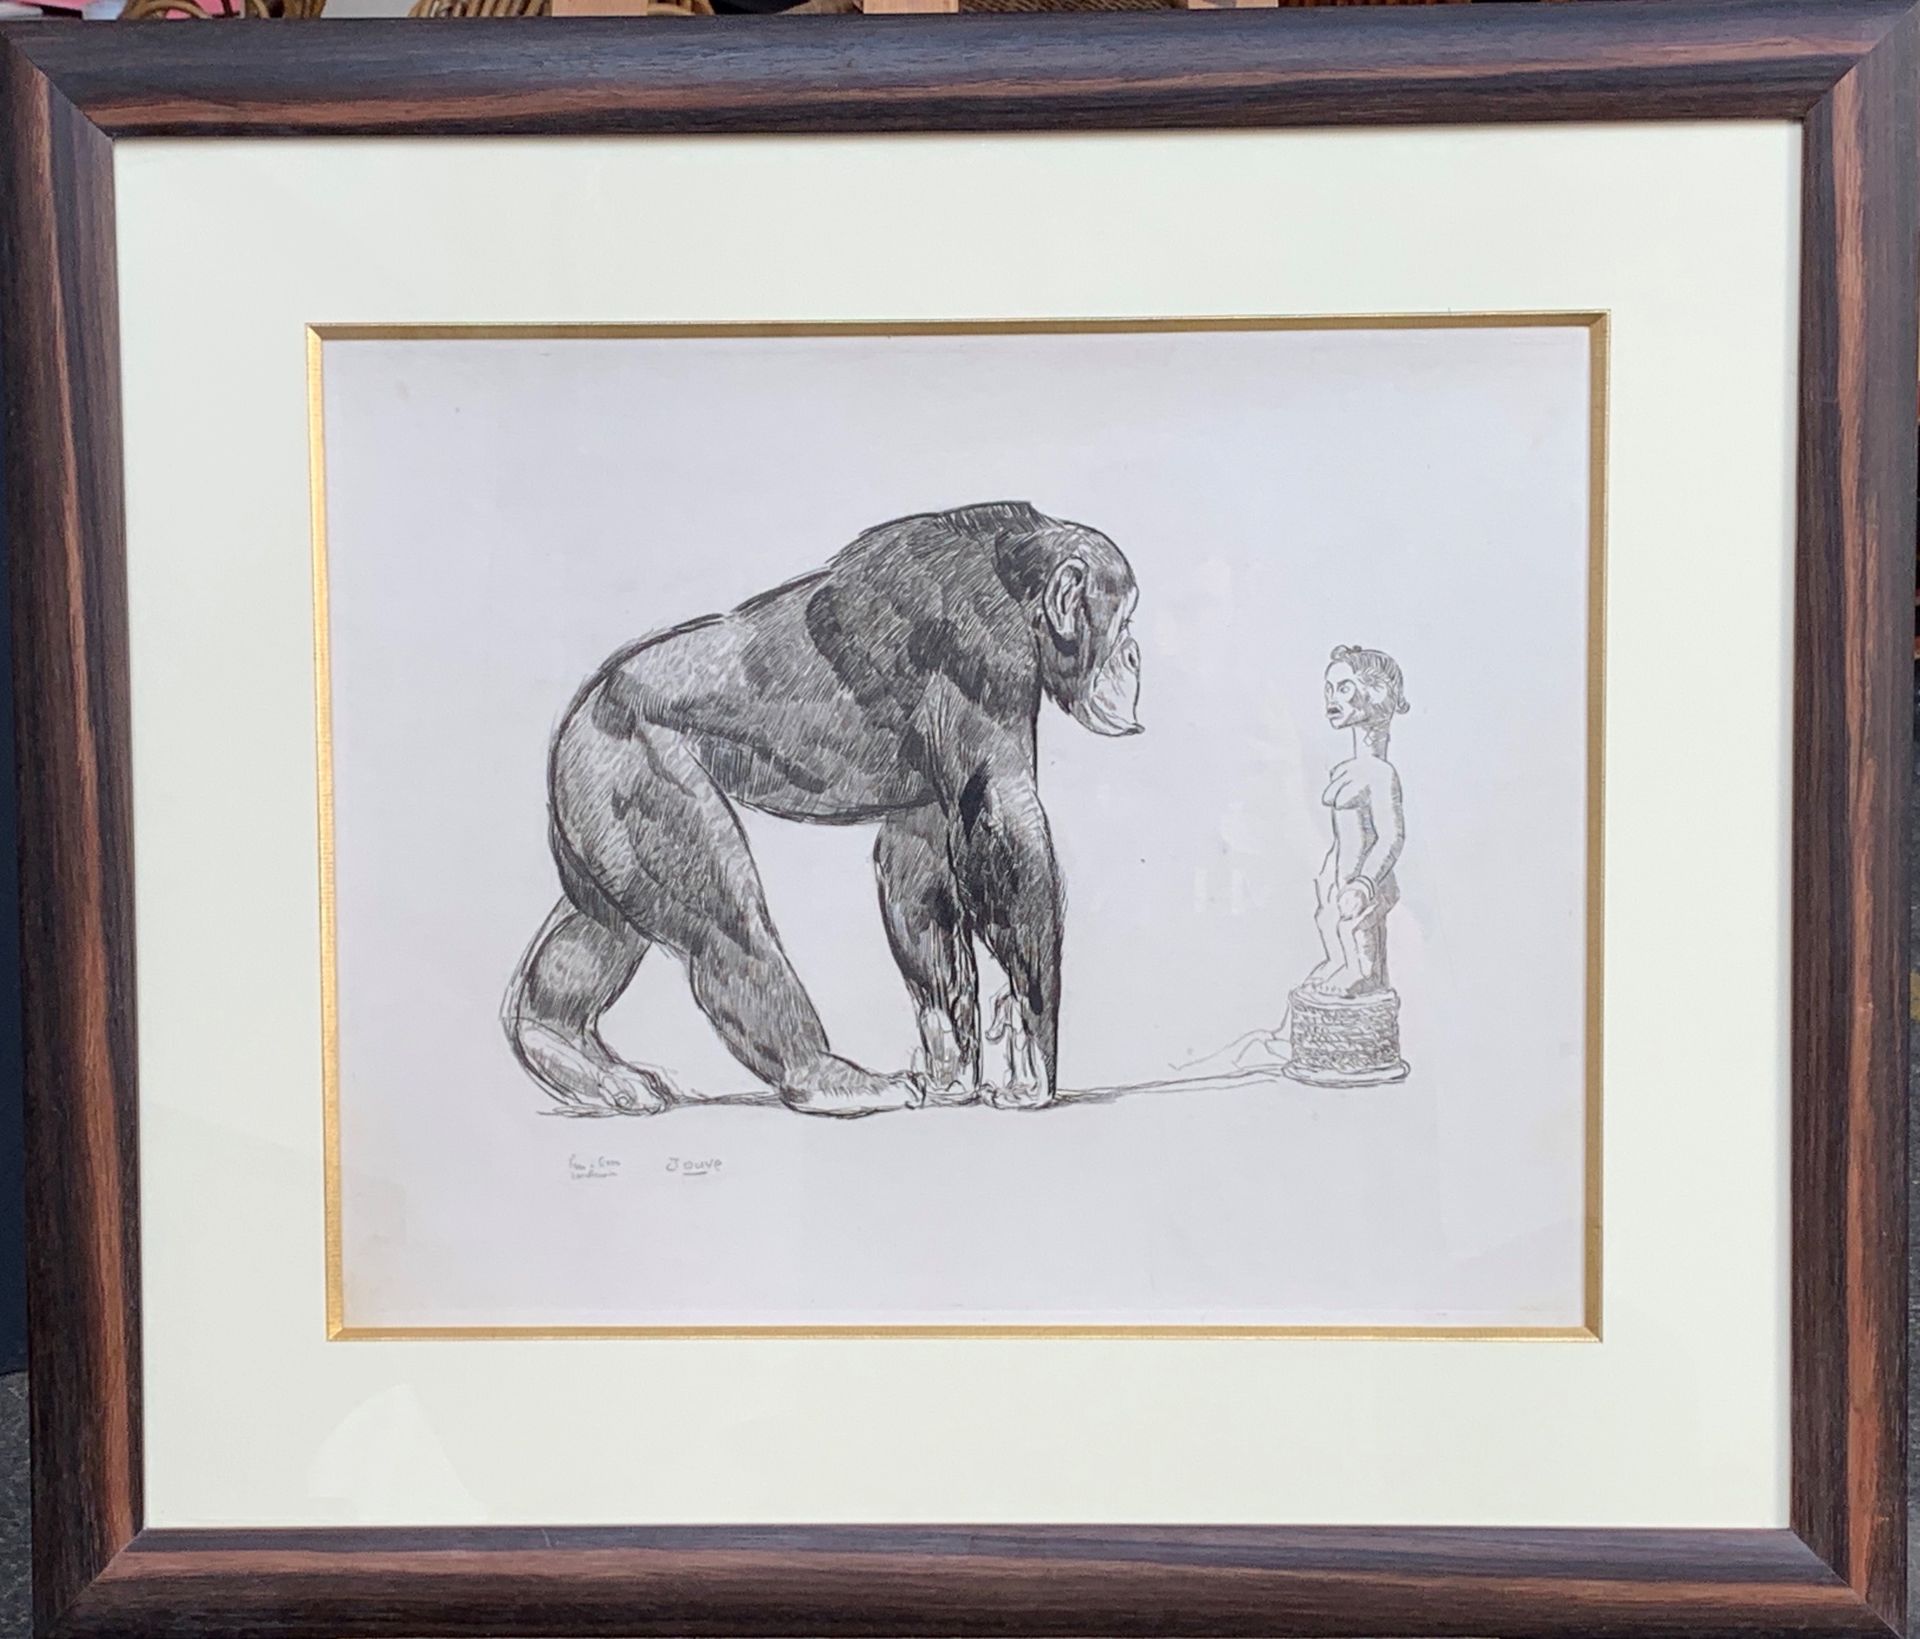 Paul JOUVE (1878-1973) Chimpanzee and Baule statue, 1931

Etching on parchment, &hellip;